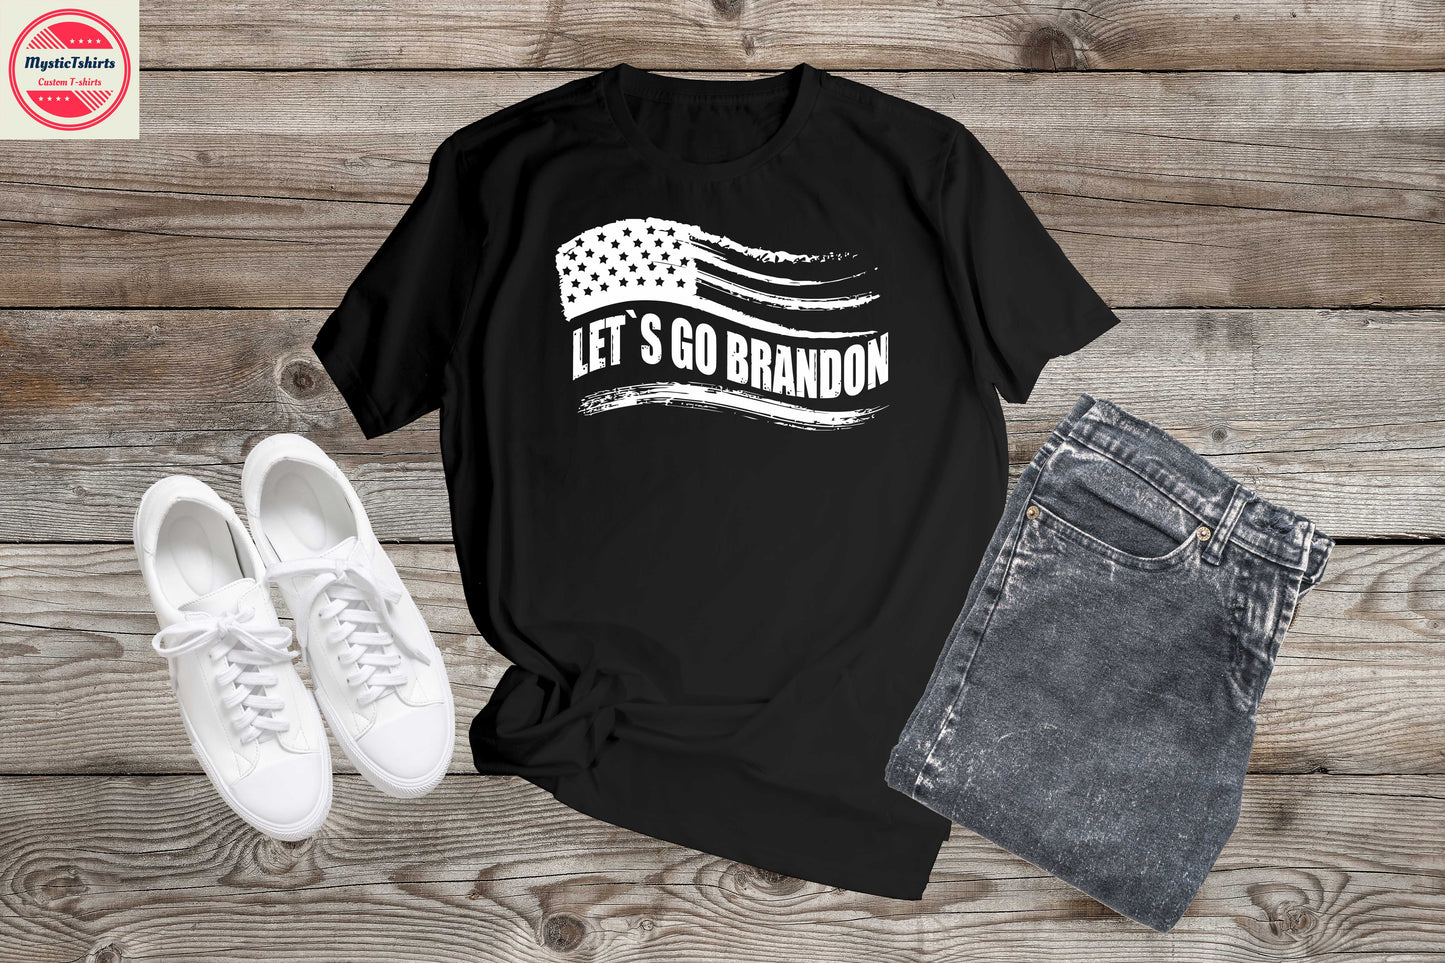 275. LET'S GO BRANDON, Custom Made Shirt, Personalized T-Shirt, Custom Text, Make Your Own Shirt, Custom Tee